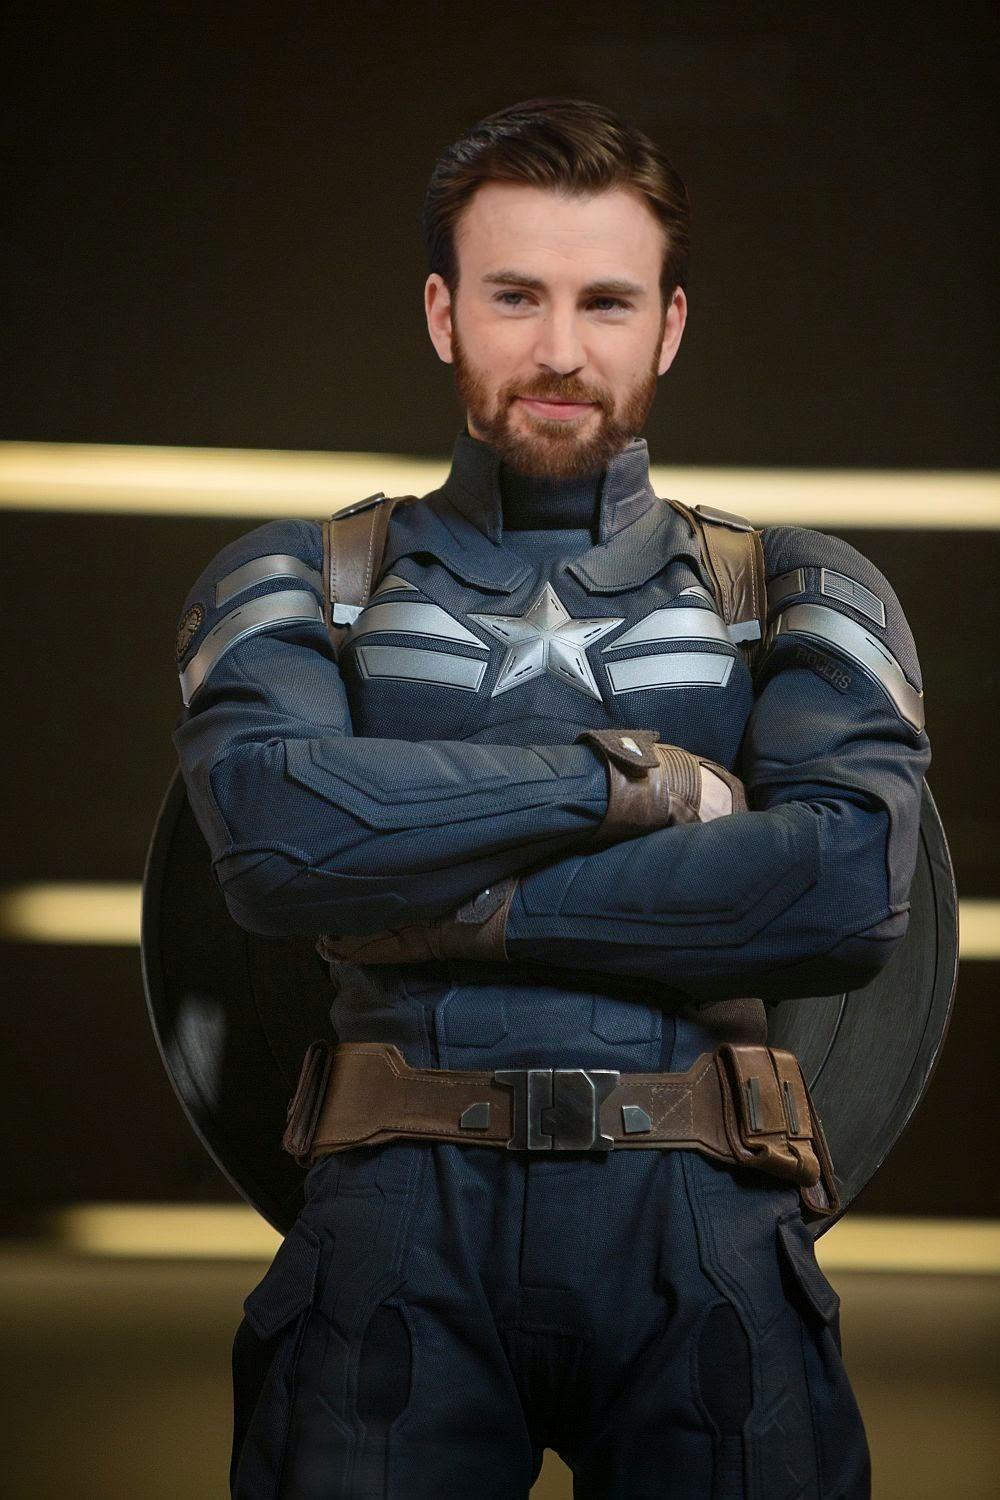 Bearded Chris Evans as Captain America. The Man Makes Me Smile